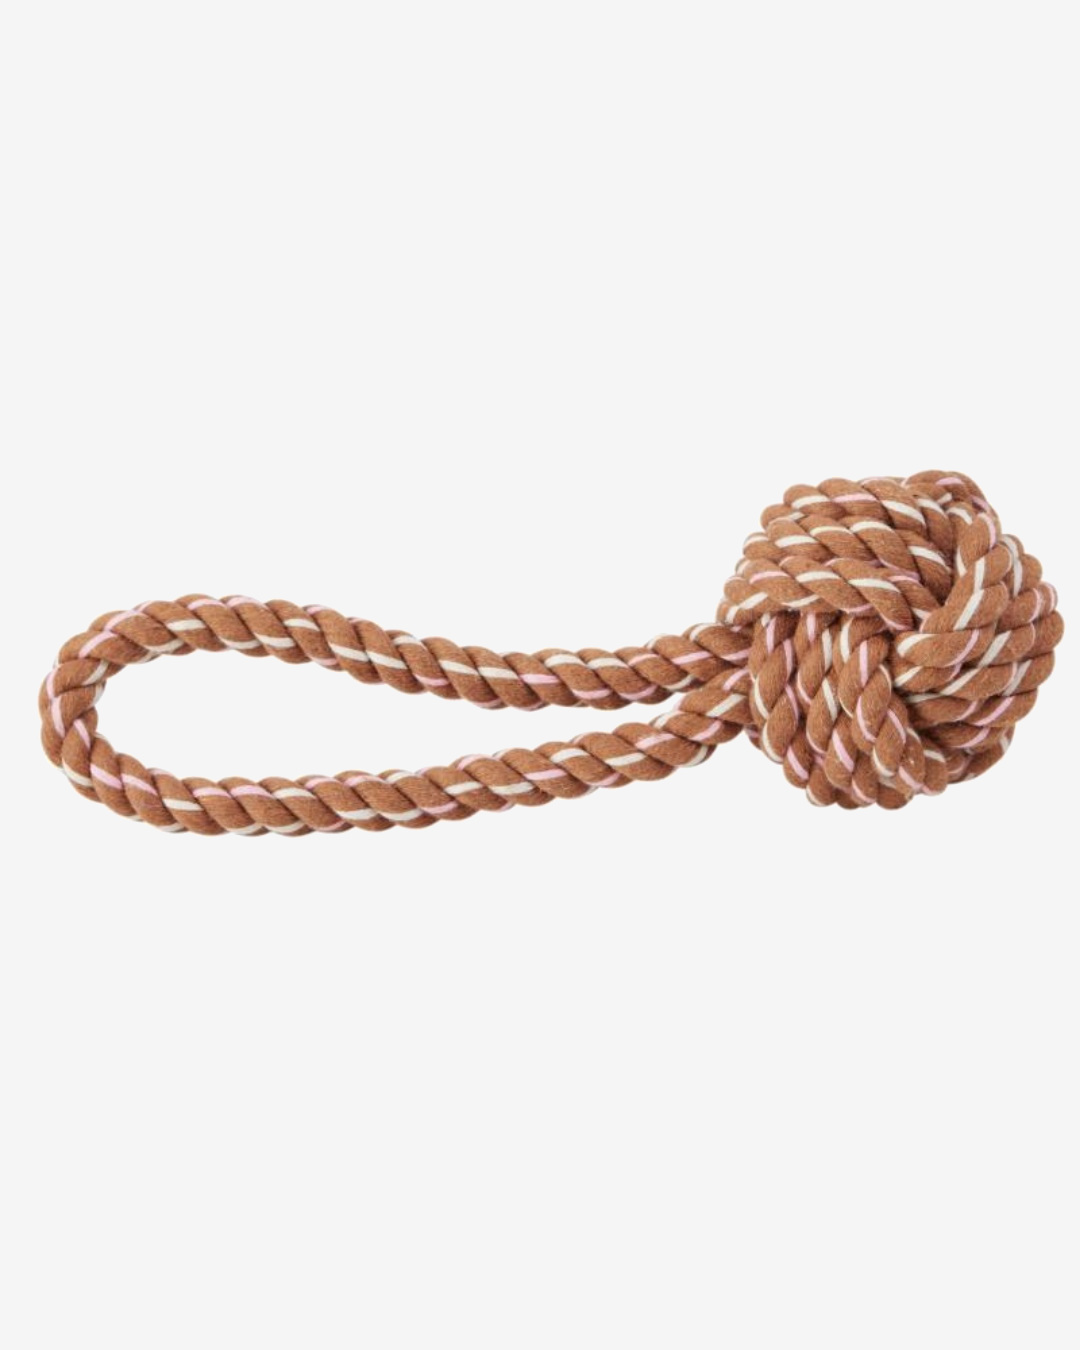 Caramel knot dog toy